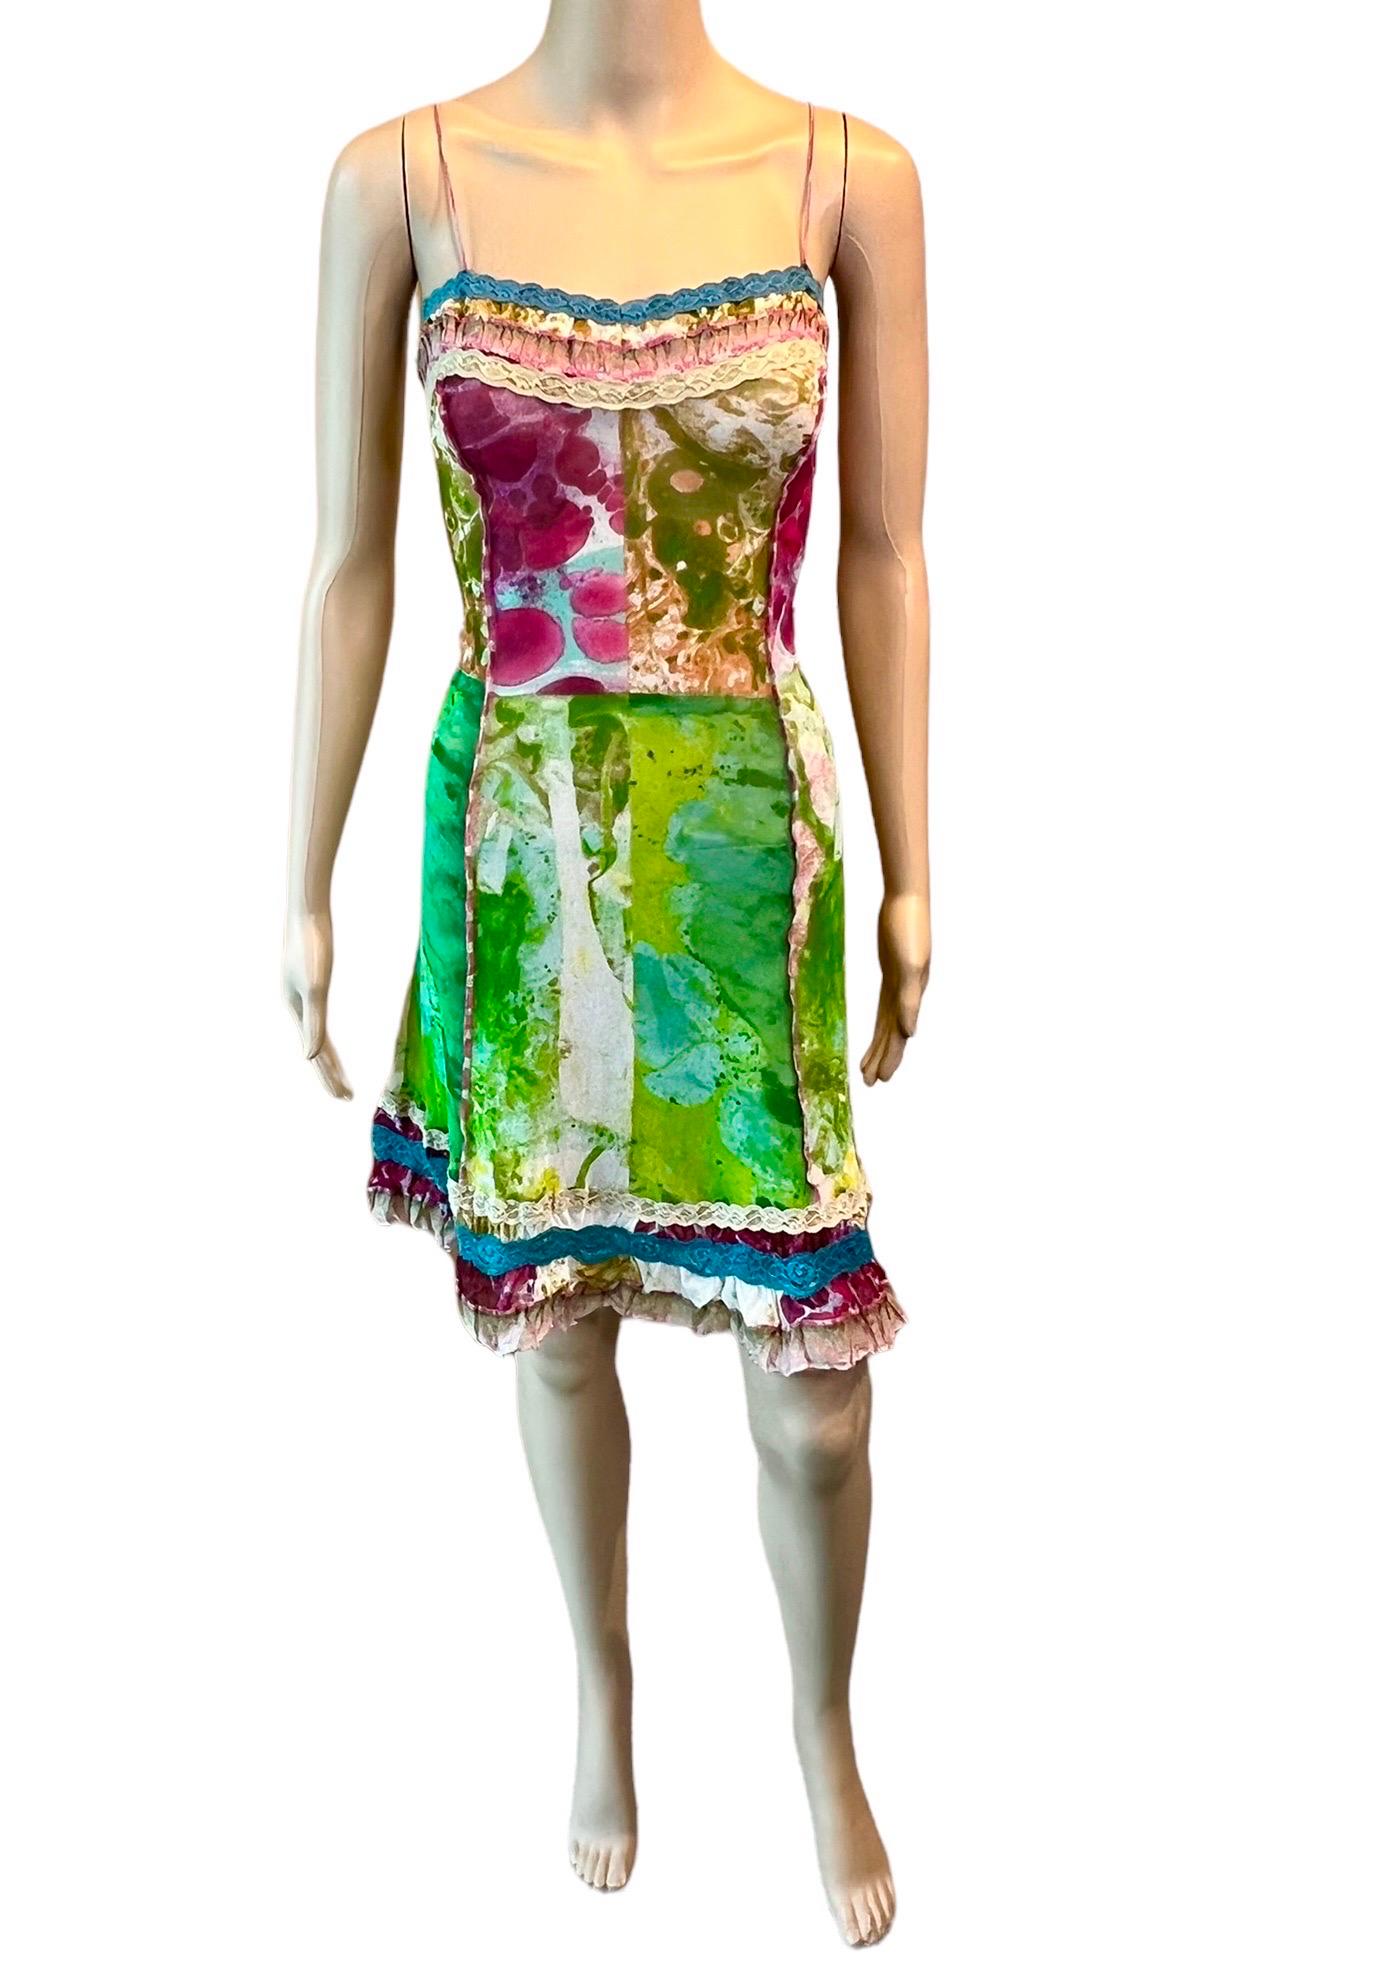 Jean Paul Gaultier S/S 2000 Psychedelic Bacteria Print Sheer Mesh Mini Dress  For Sale 5